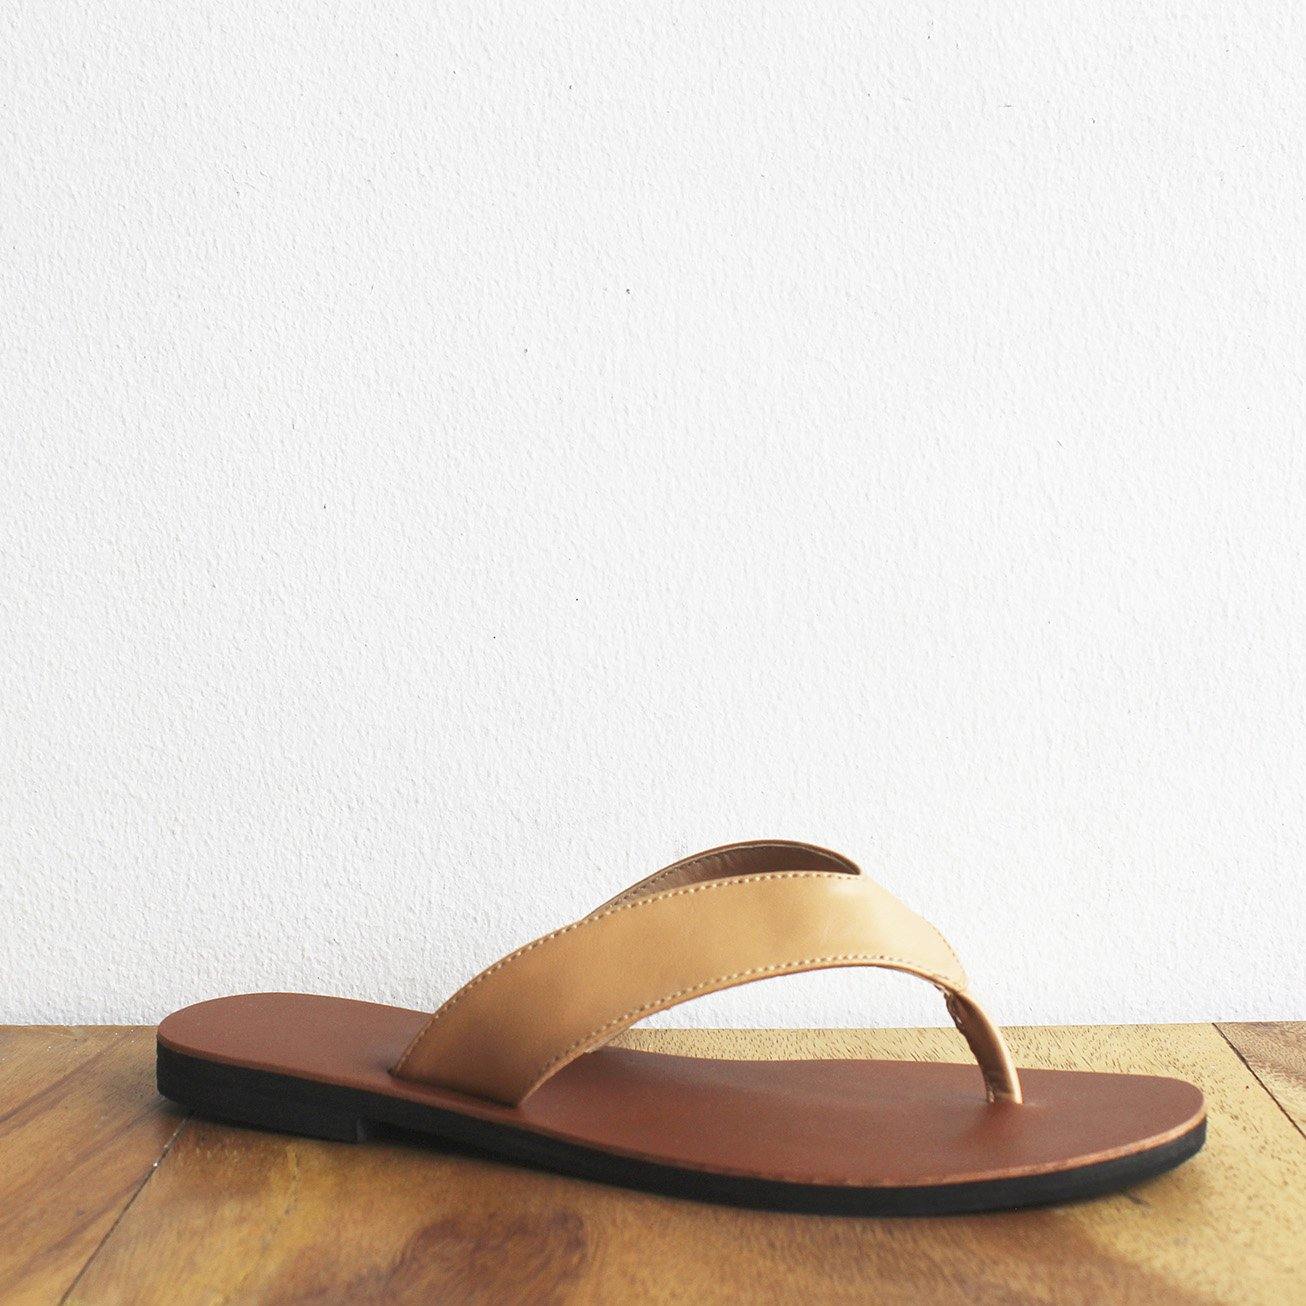 Thong Sandals (5 pairs per set) - Risque Manufacturing